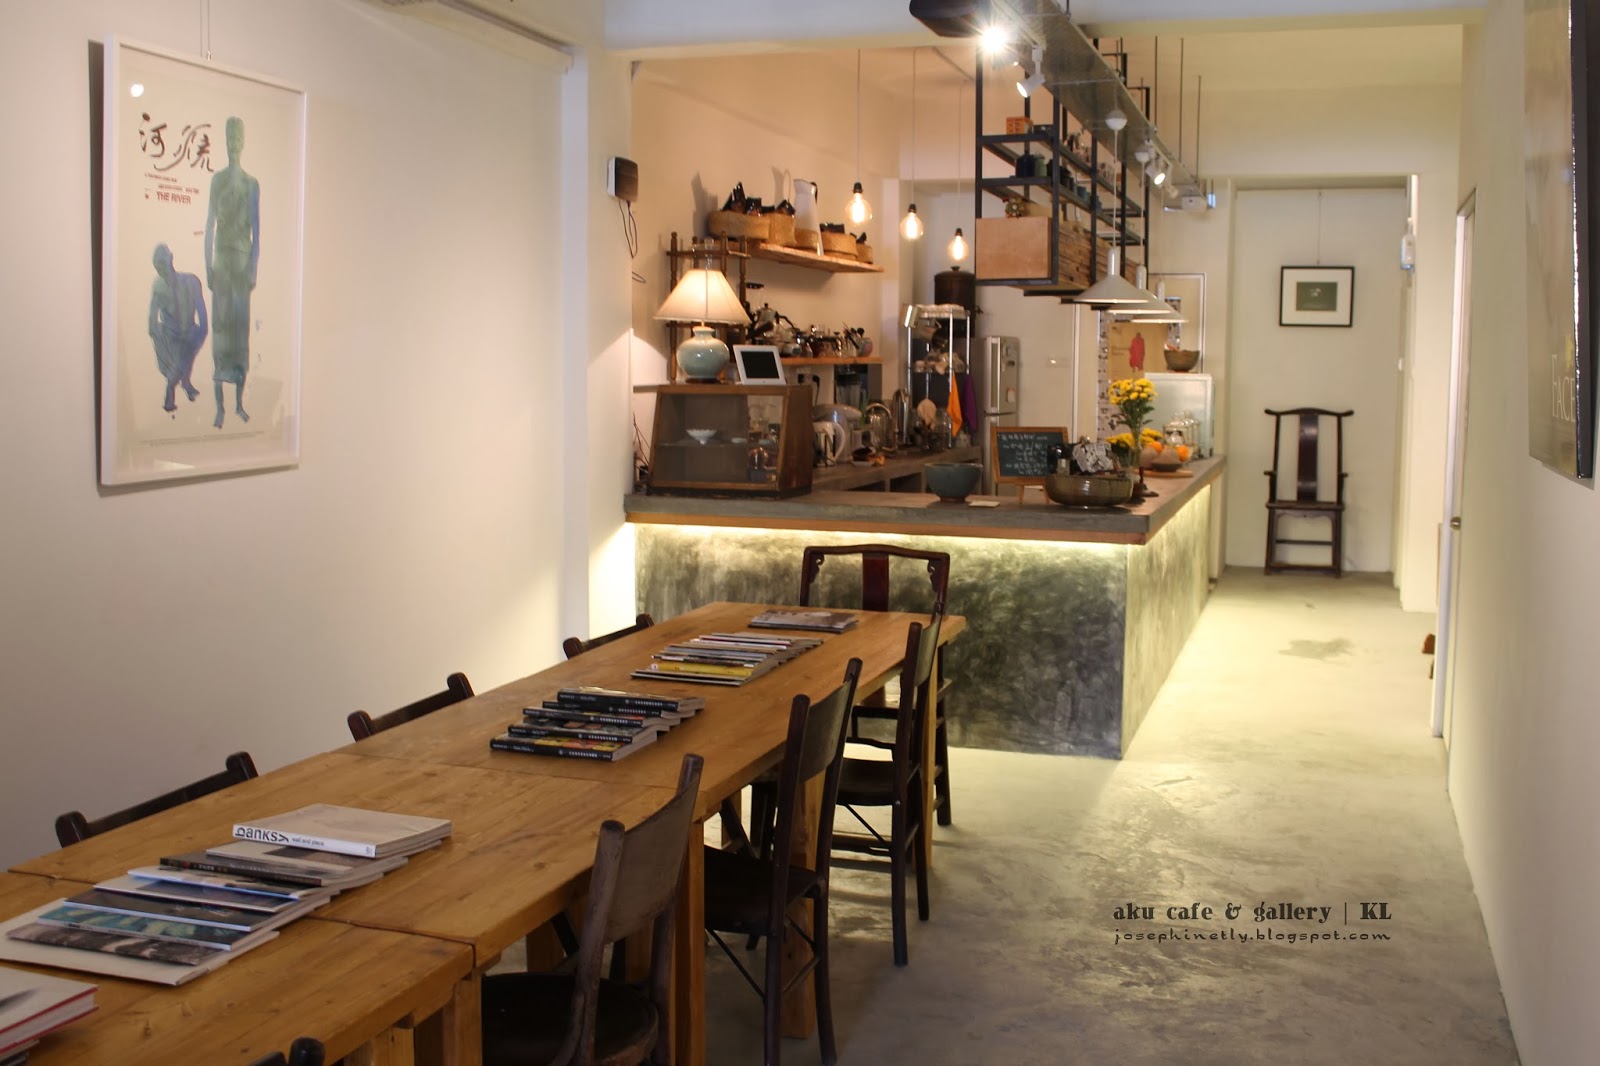 Aku Cafe and Gallery